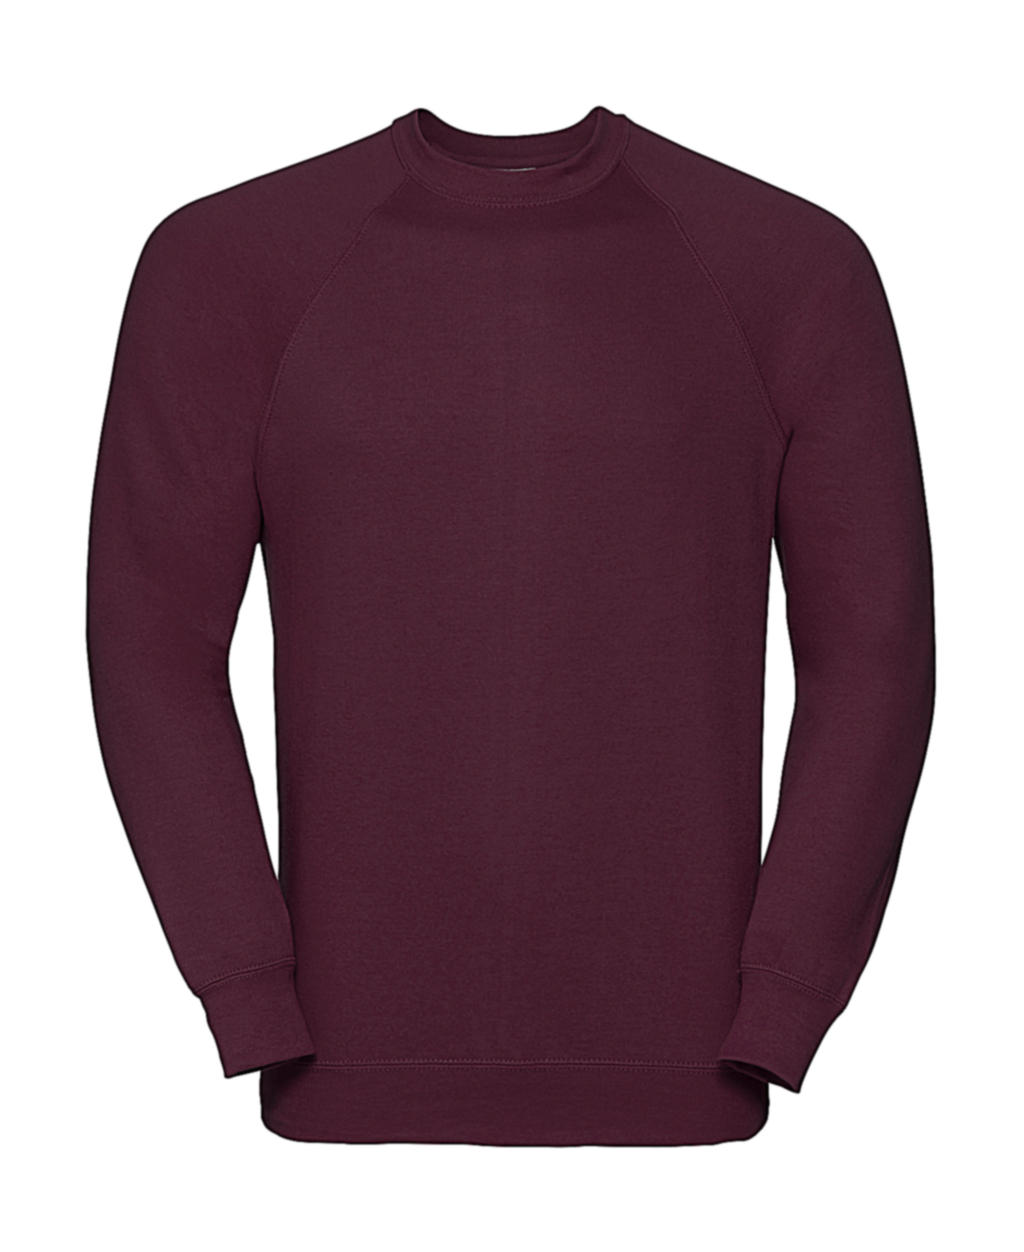  Classic Raglan Sweatshirt in Farbe Burgundy